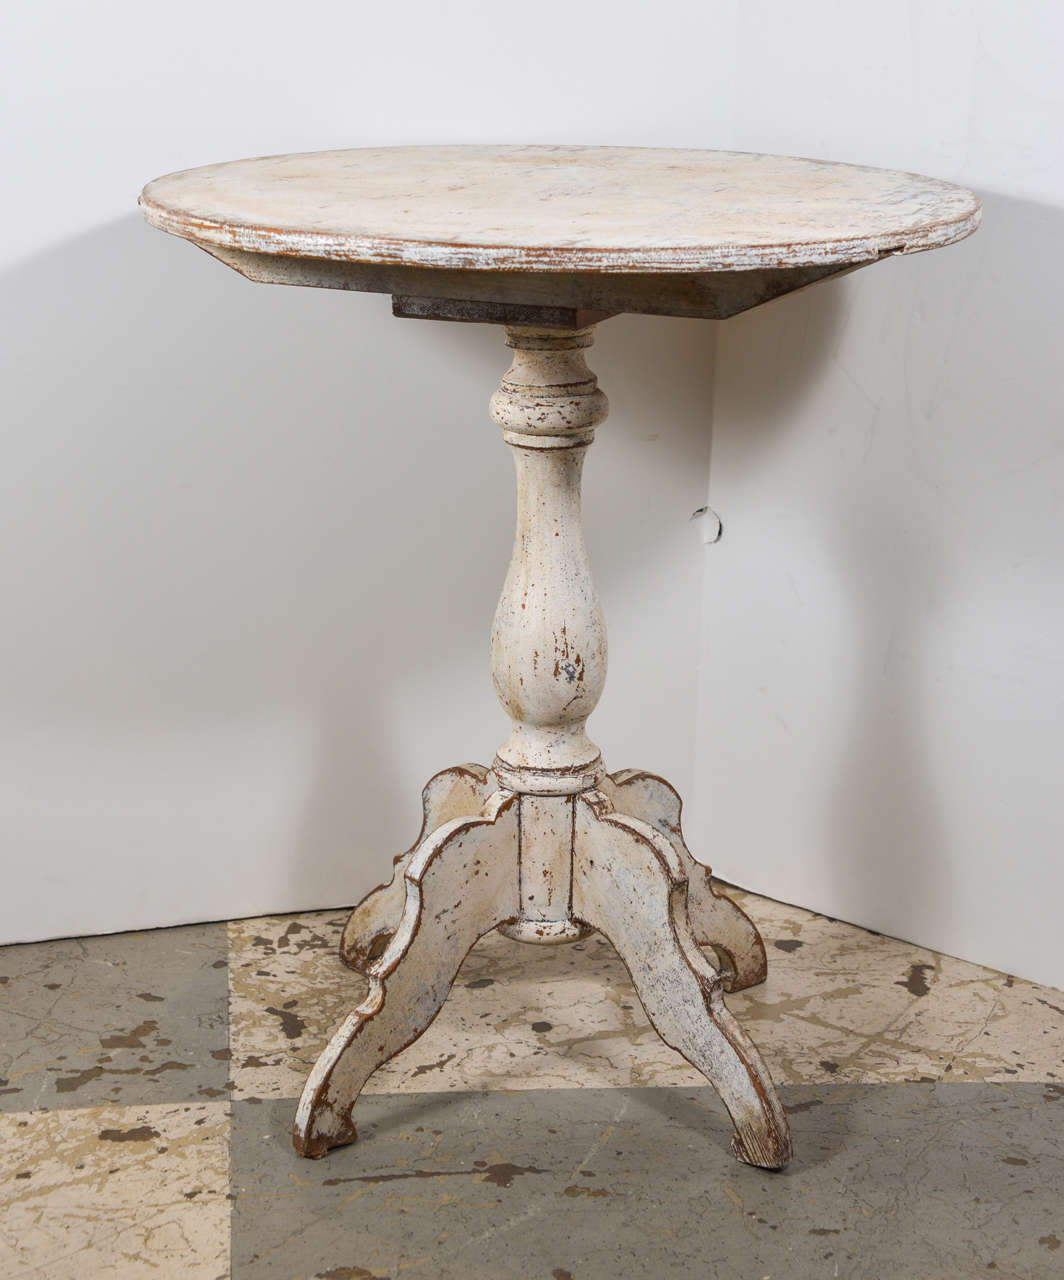 Charming 19th century Swedish pedestal table, scraped finish.